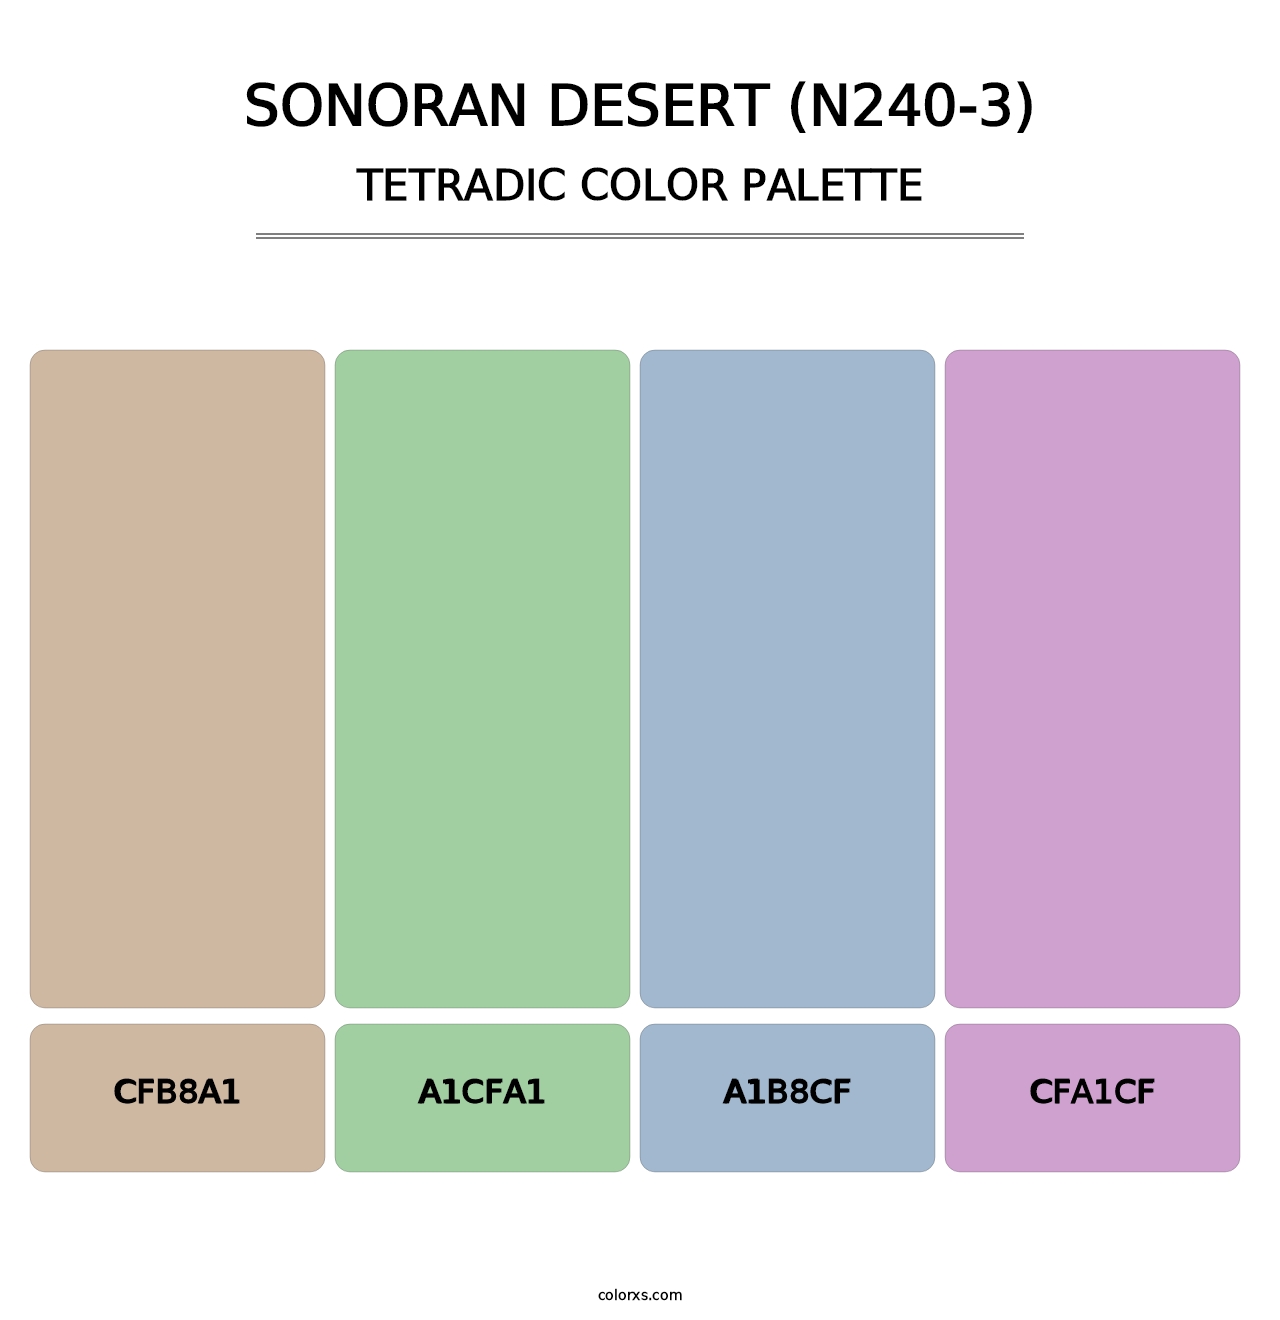 Sonoran Desert (N240-3) - Tetradic Color Palette